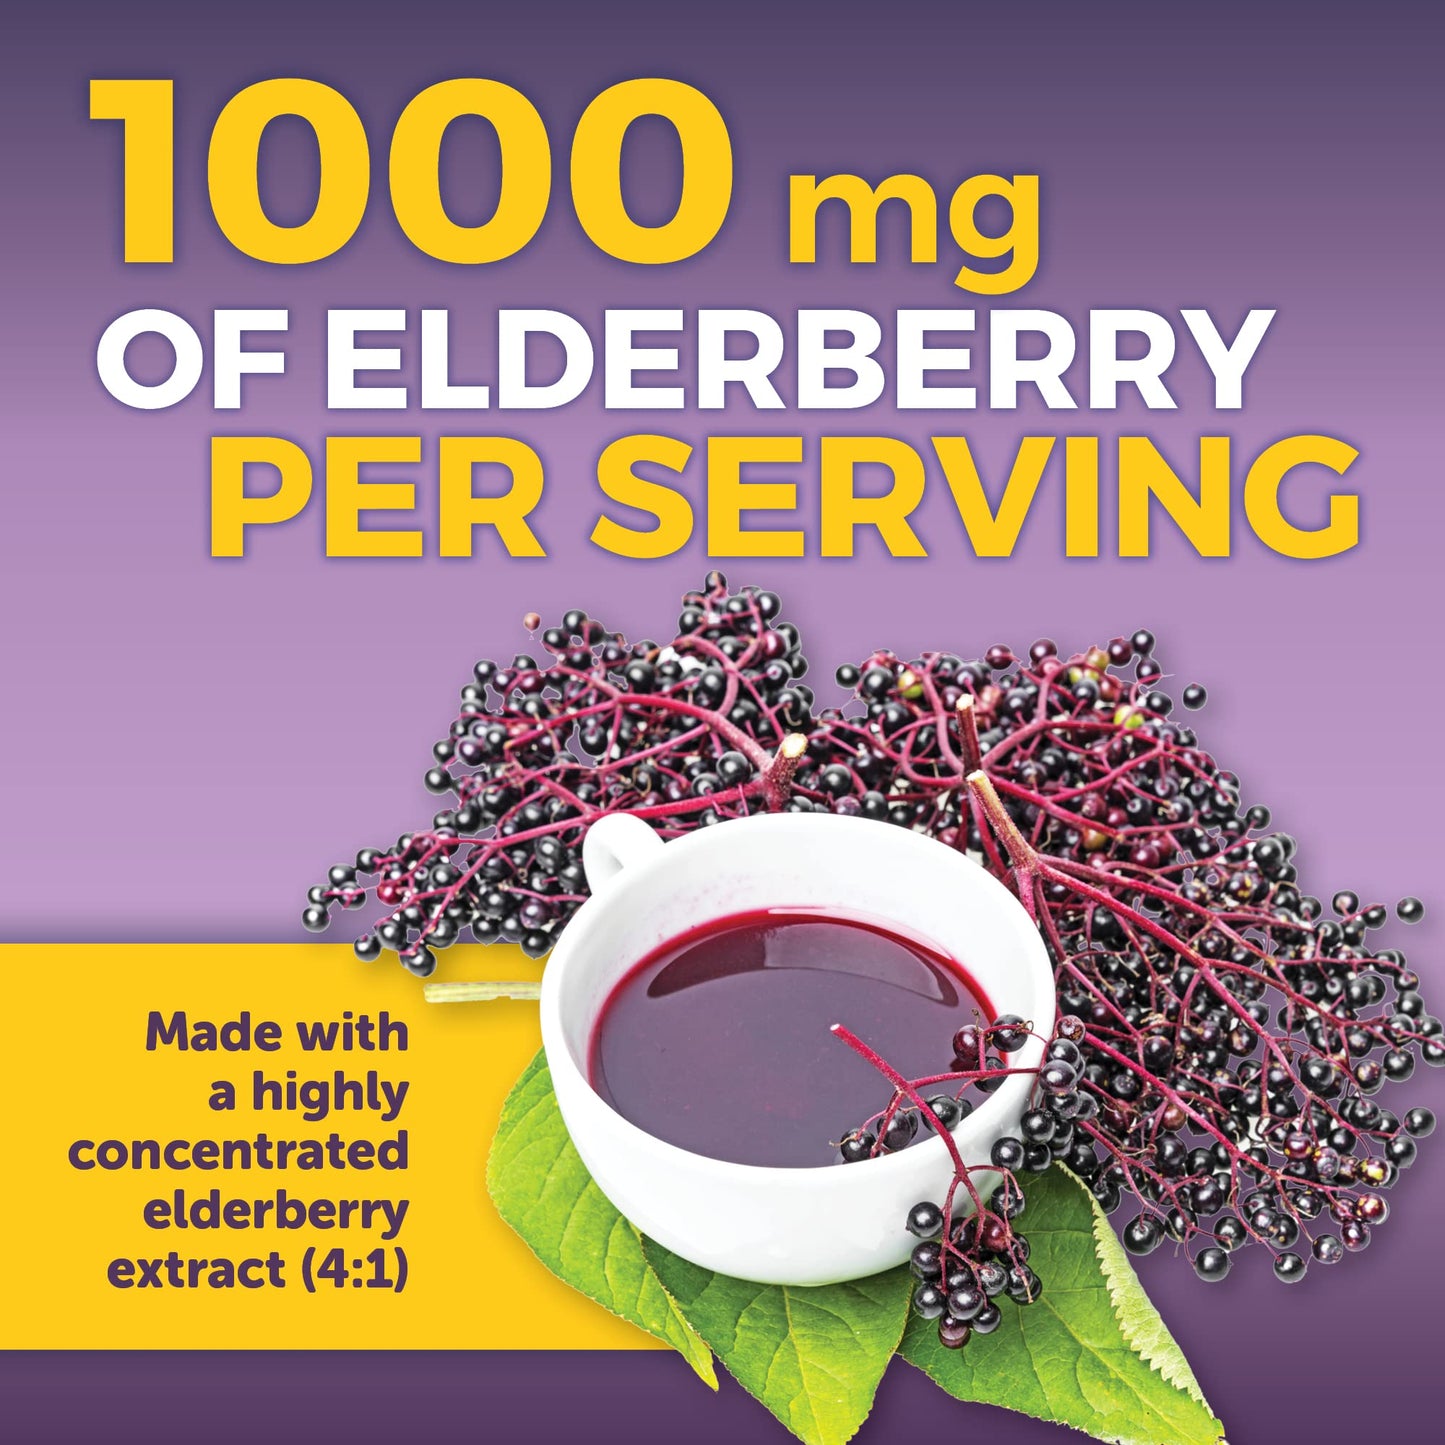 Viva Naturals Elderberry with Vitamin C and Zinc for Adults - 5 in 1 Sambucus Black Elderberry Capsules with Vitamin D3 5000 IU, Elderberries Immune Support Supplement 2 Months Supply Pills